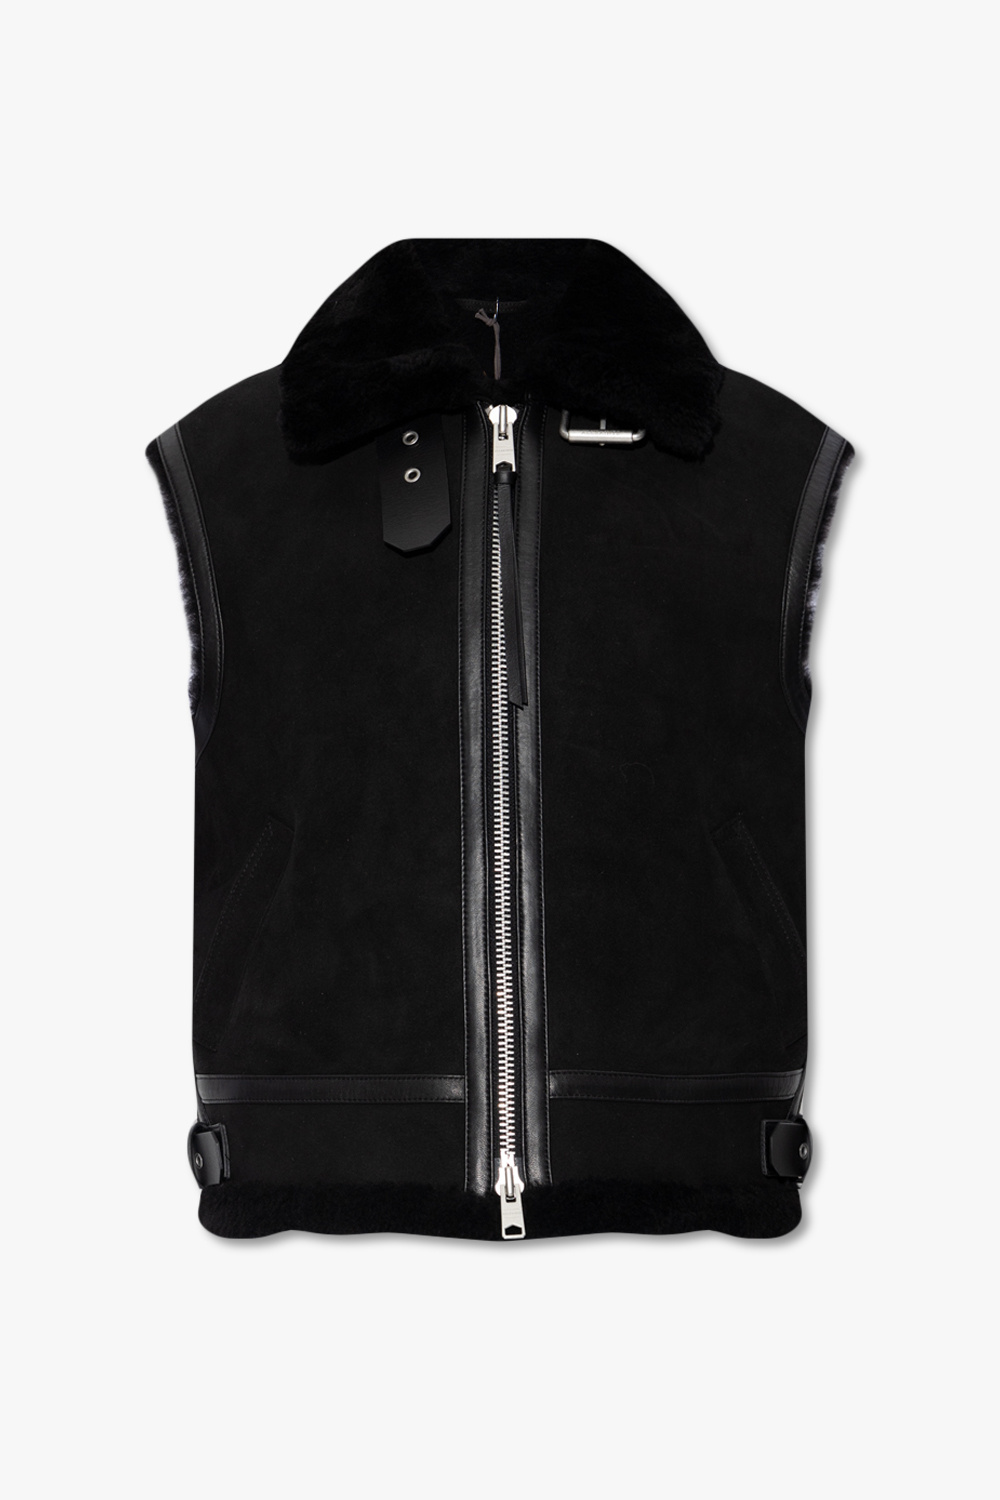 AllSaints ‘Tova’ leather vest